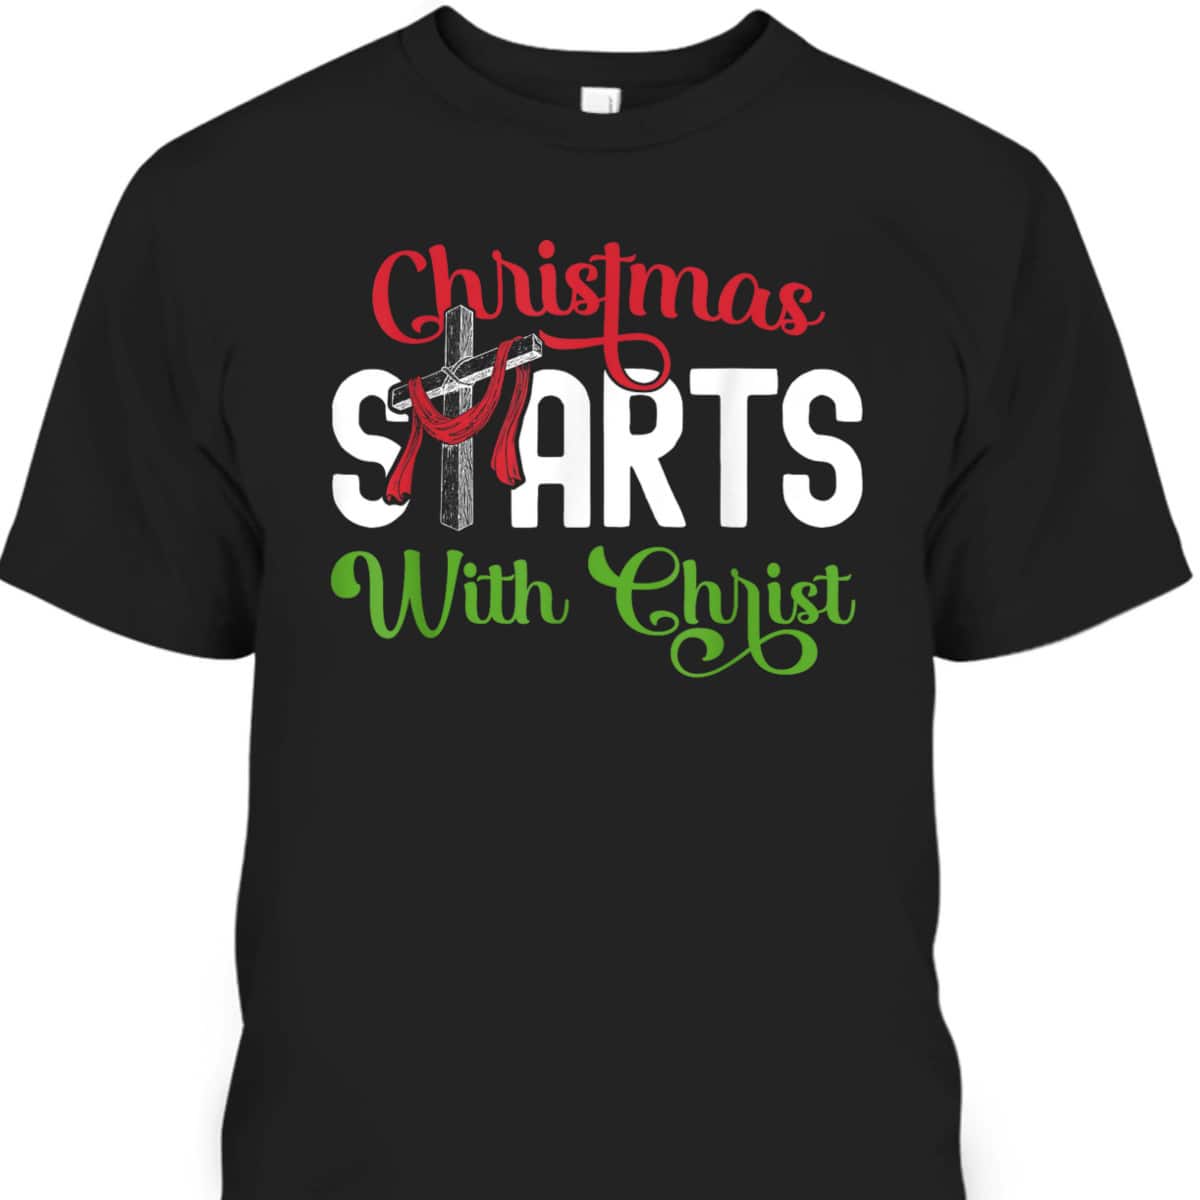 Christmas Starts With Christ Christian Cross Jesus T-Shirt